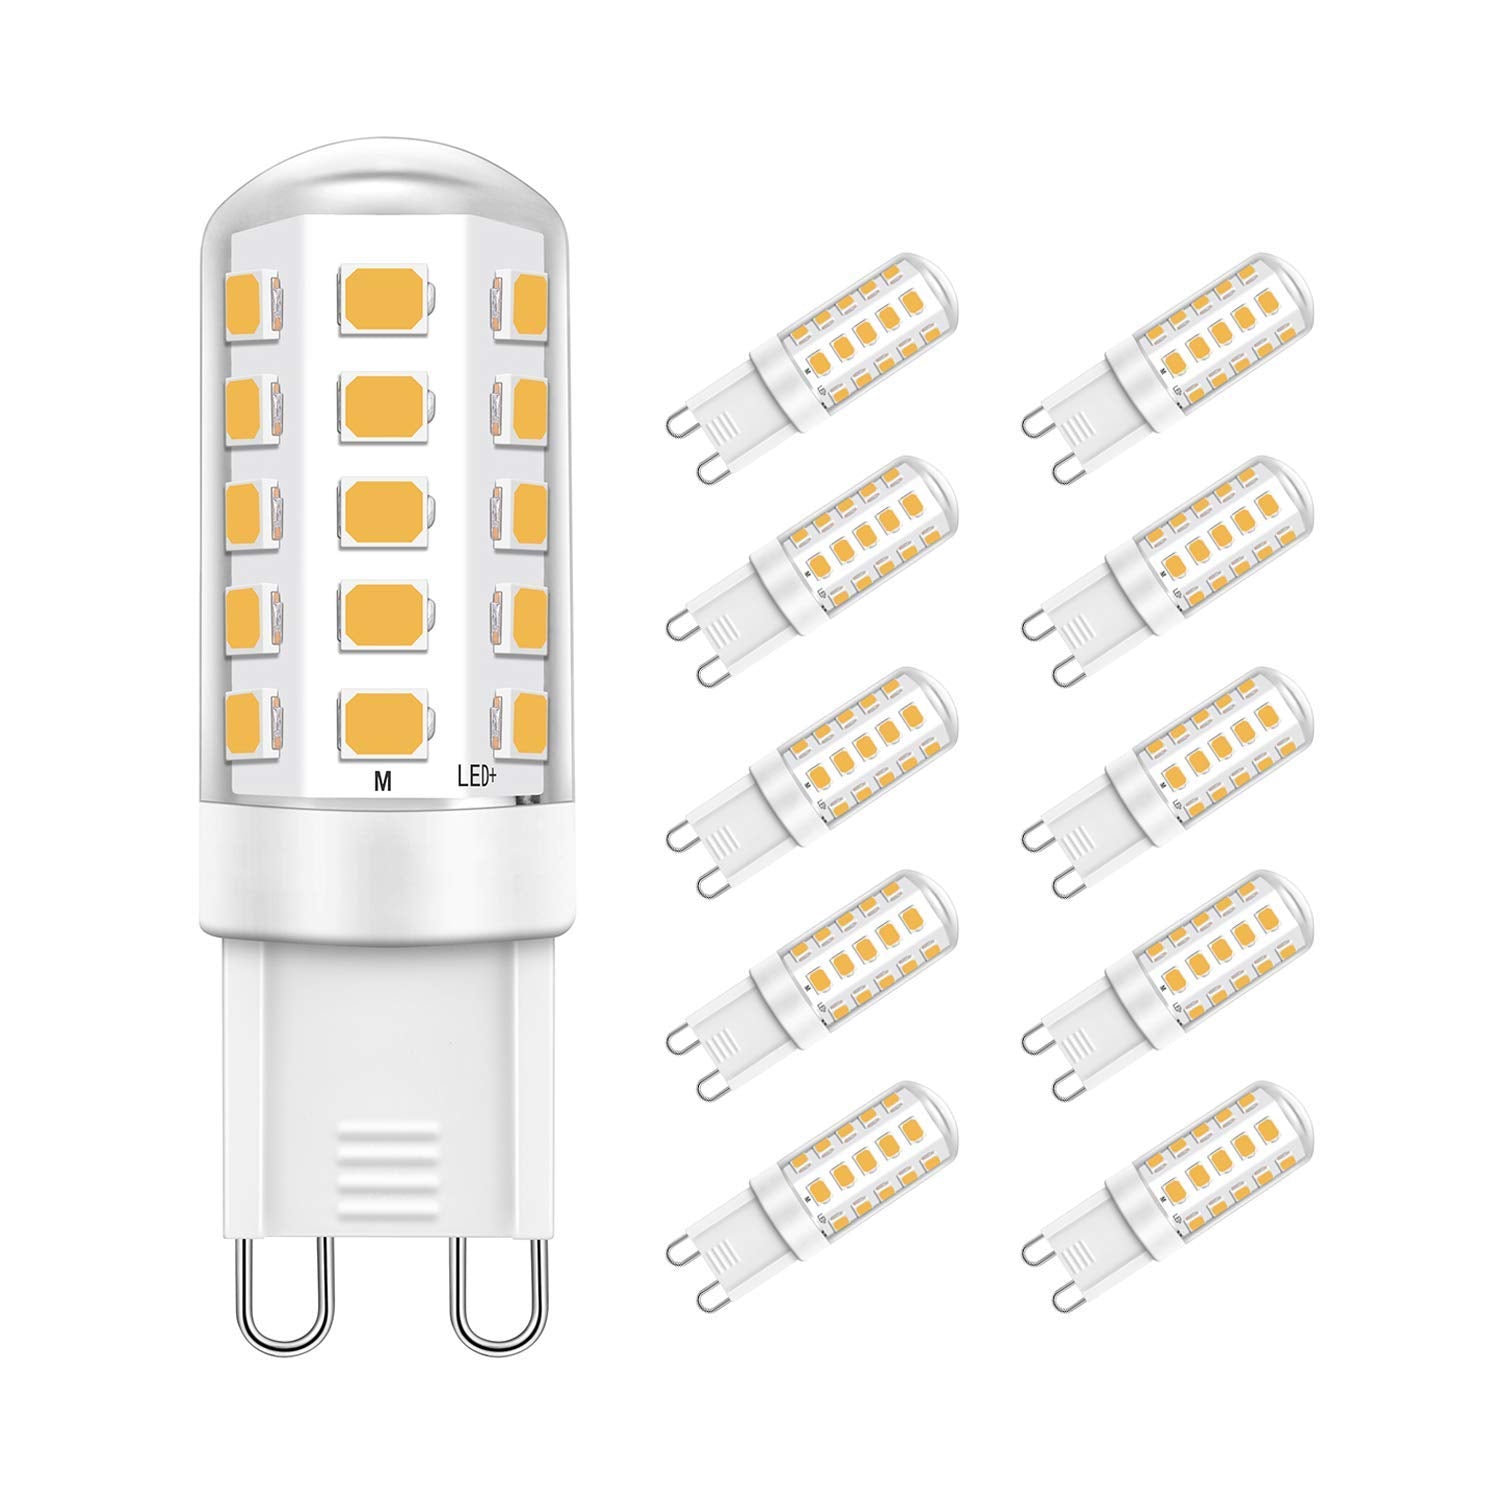 Jpodream® G9 LED Bulbs, 5W 32 x 2835 SMD Energy Saving Bulbs, 400LM, Equivalent to 40W Halogen Bulbs, Warm White 2700K, AC220-240V, 360° Beam Angle - 10 Pack